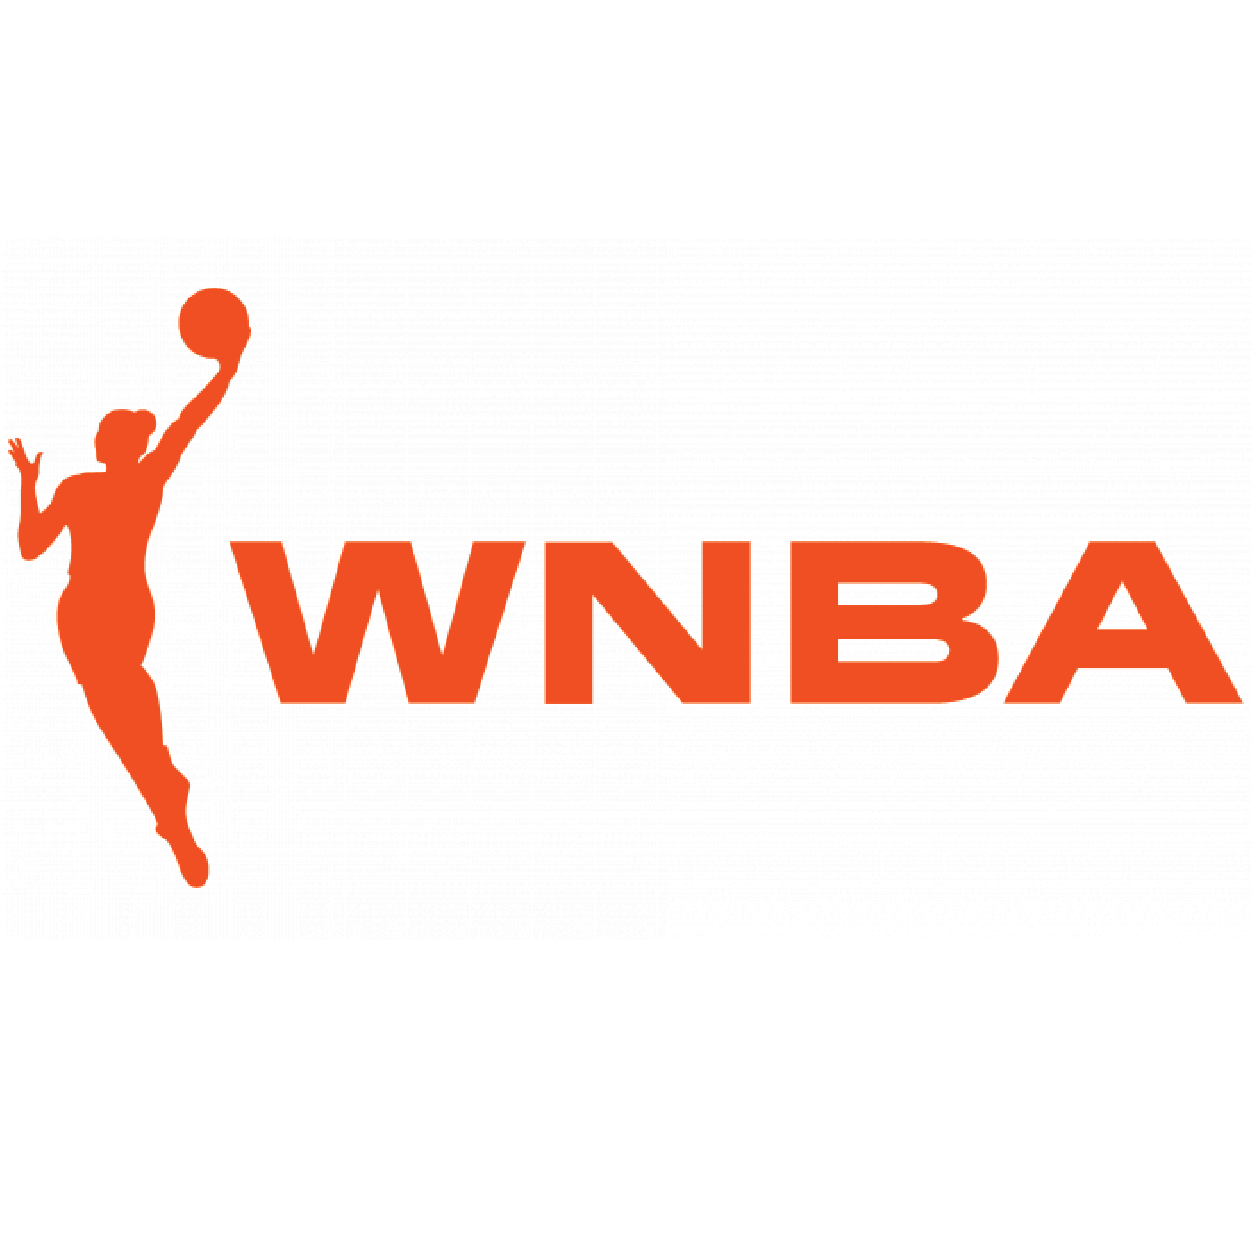 Wnba logo